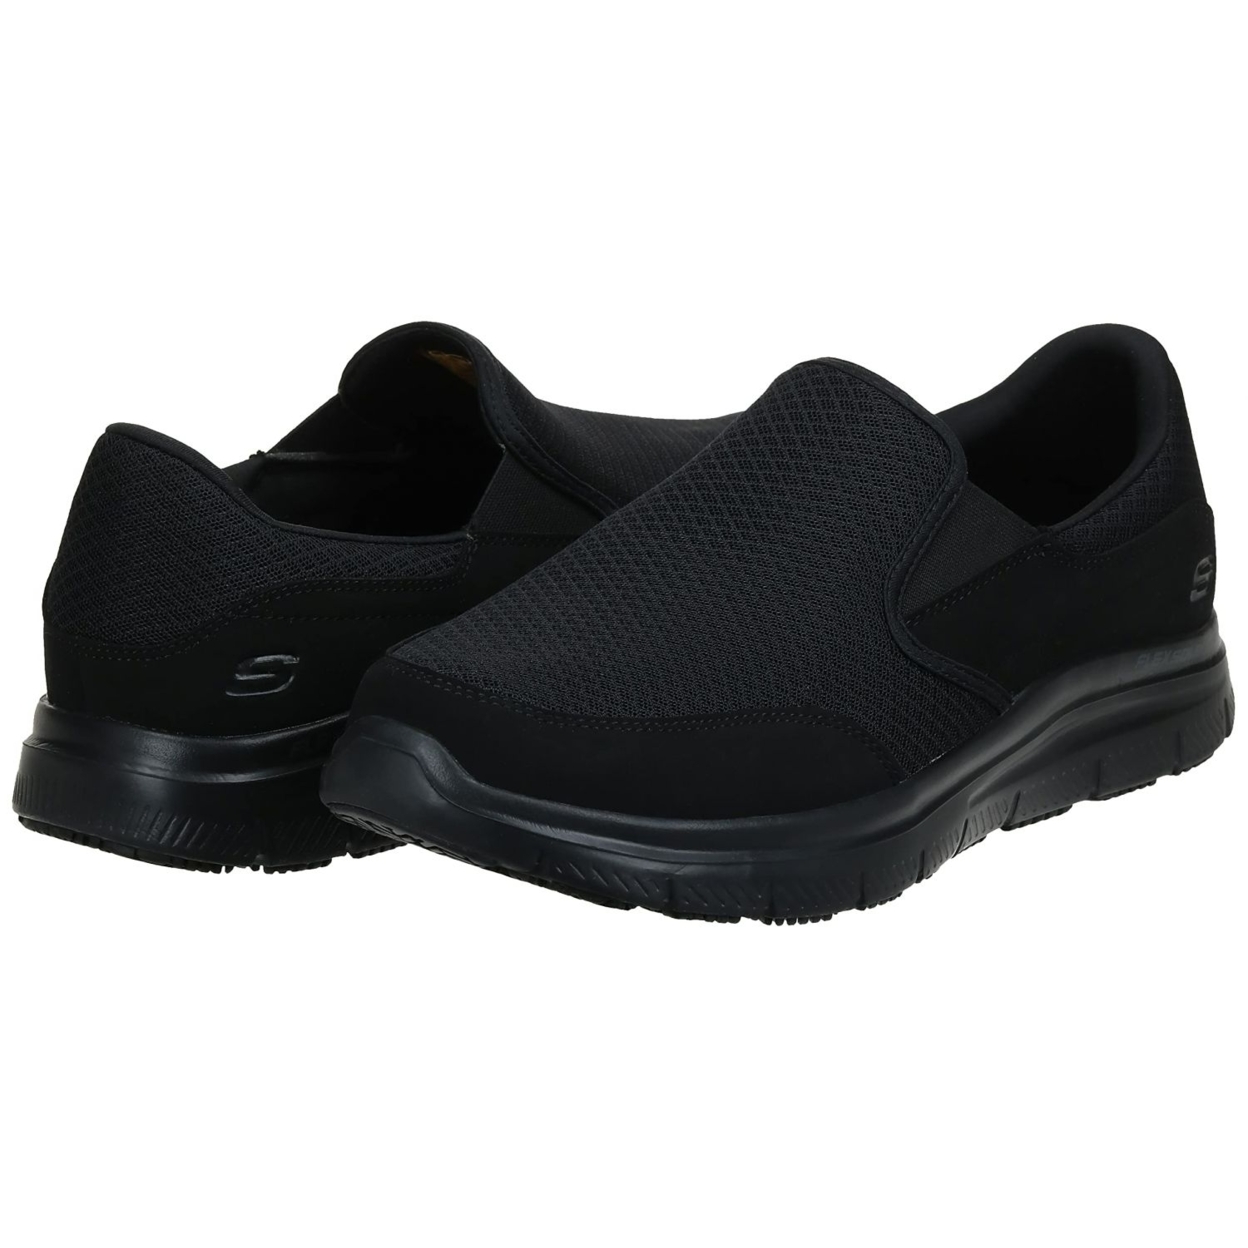 Skechers For Work Men's Flex Advantage Mcallen Food Service Shoe ONE SIZE BLACK - BLACK, 8.5